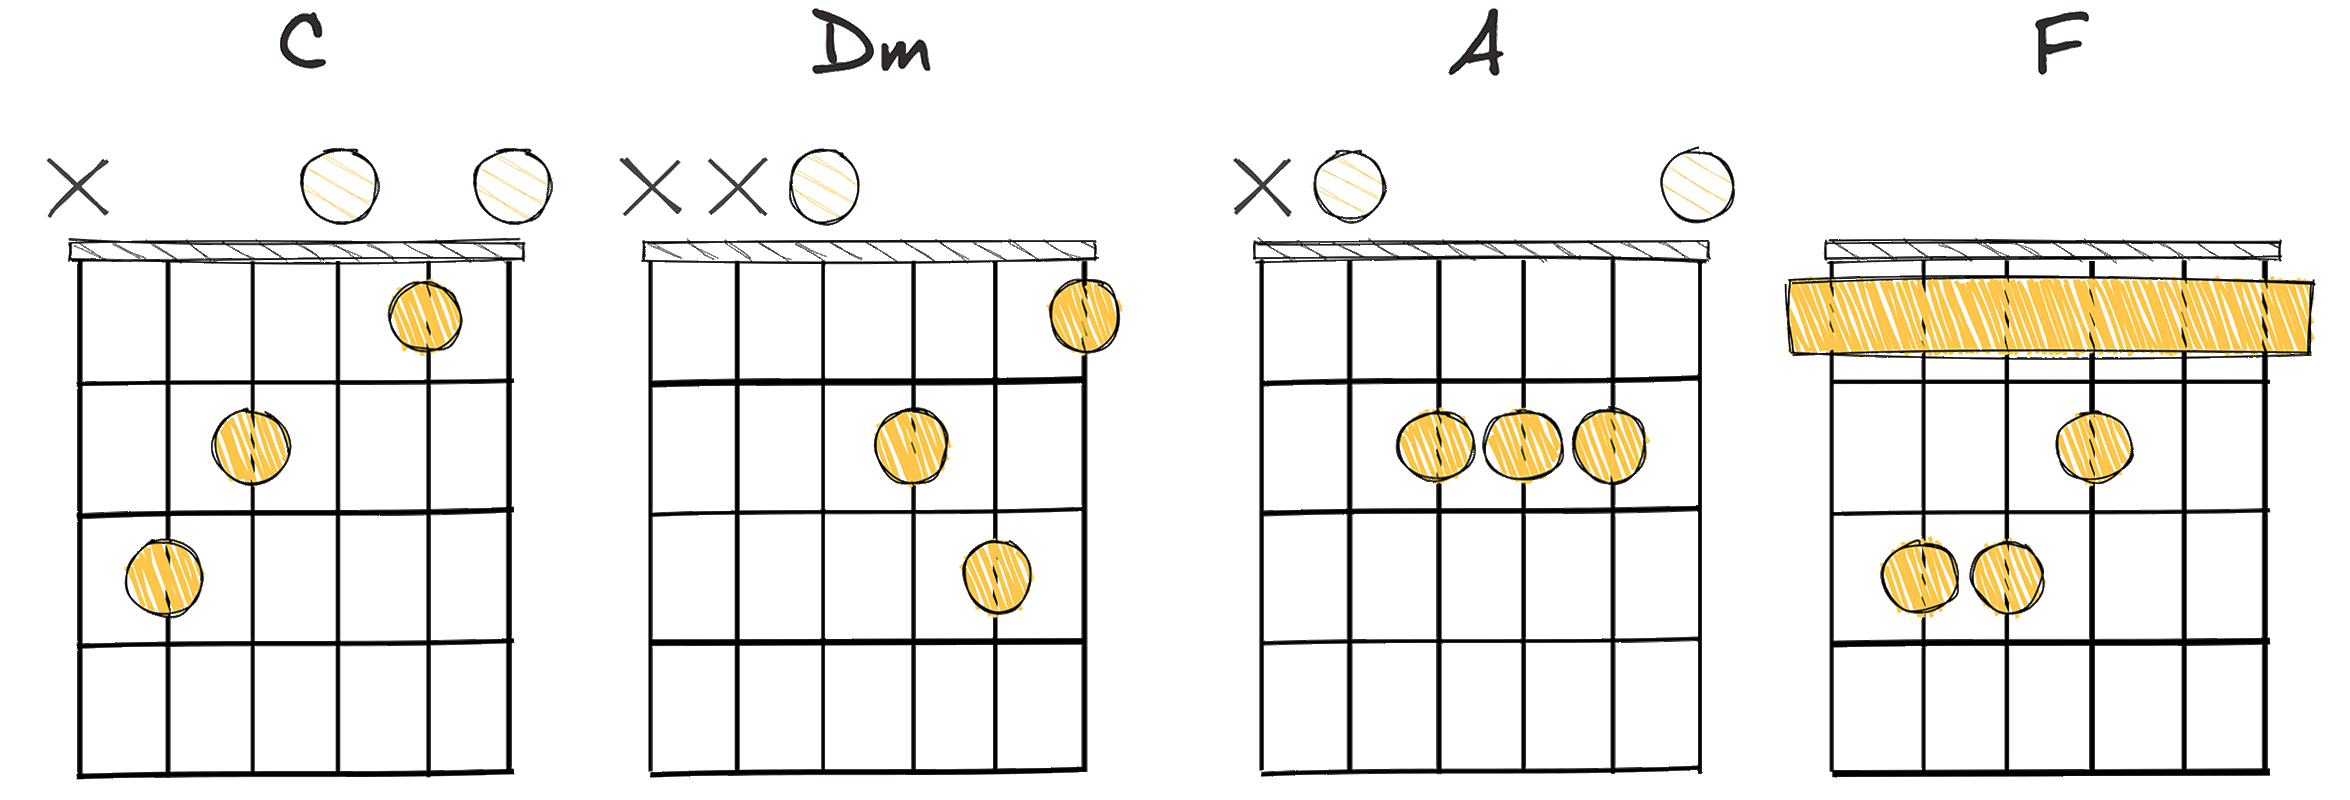 I-ii-VI-IV (1-2-6-4) chords diagram